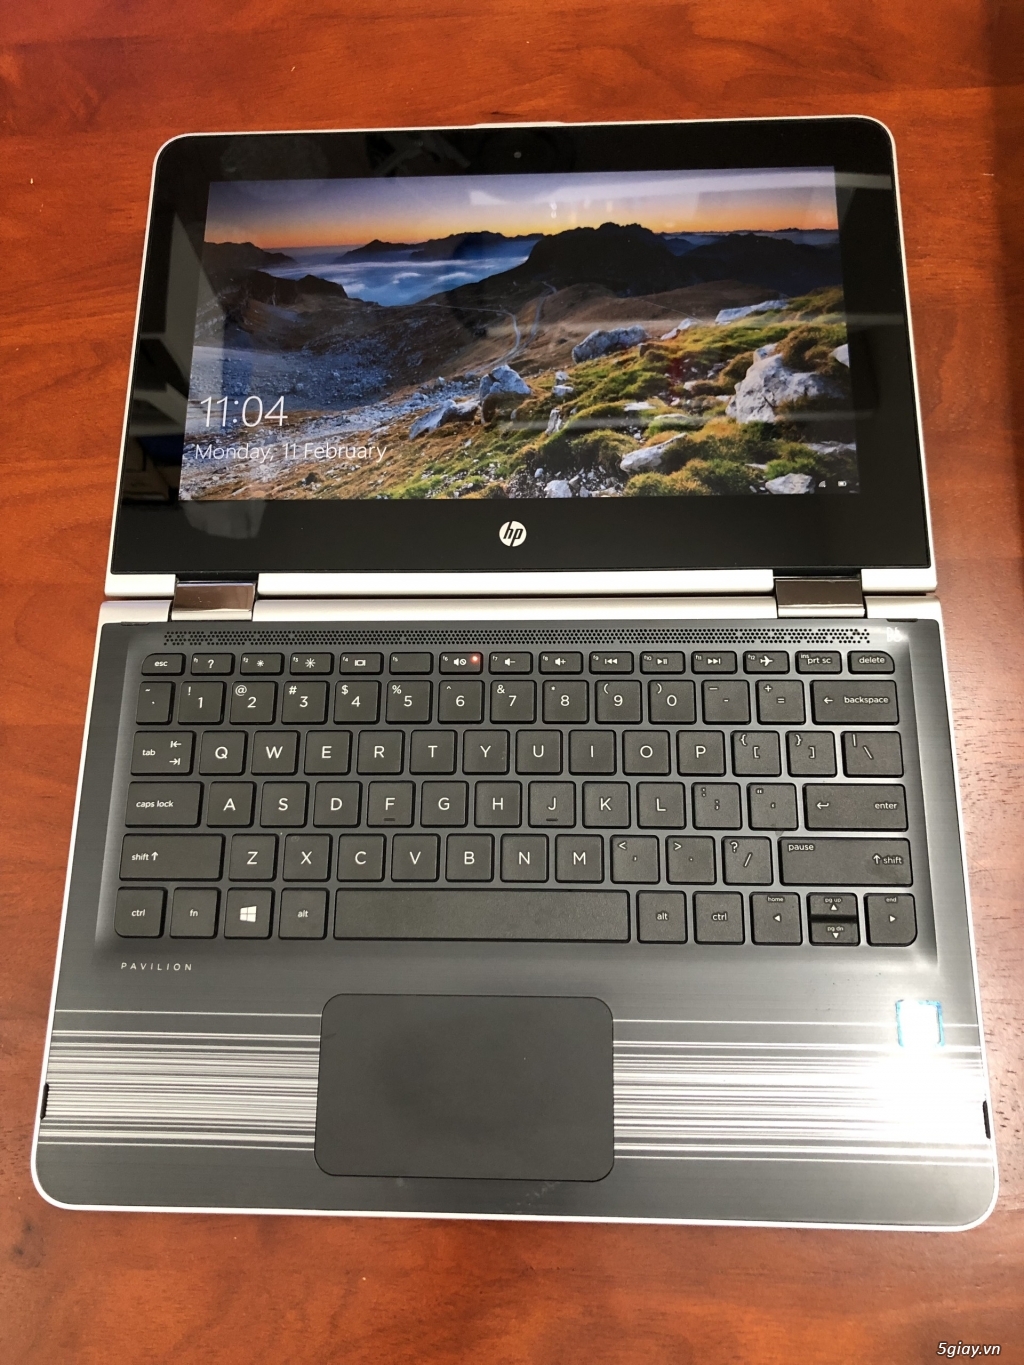 Bán laptop HP Pavilion x360 core i3-7100U cản ứng xoay 360, giá rẻ - 5